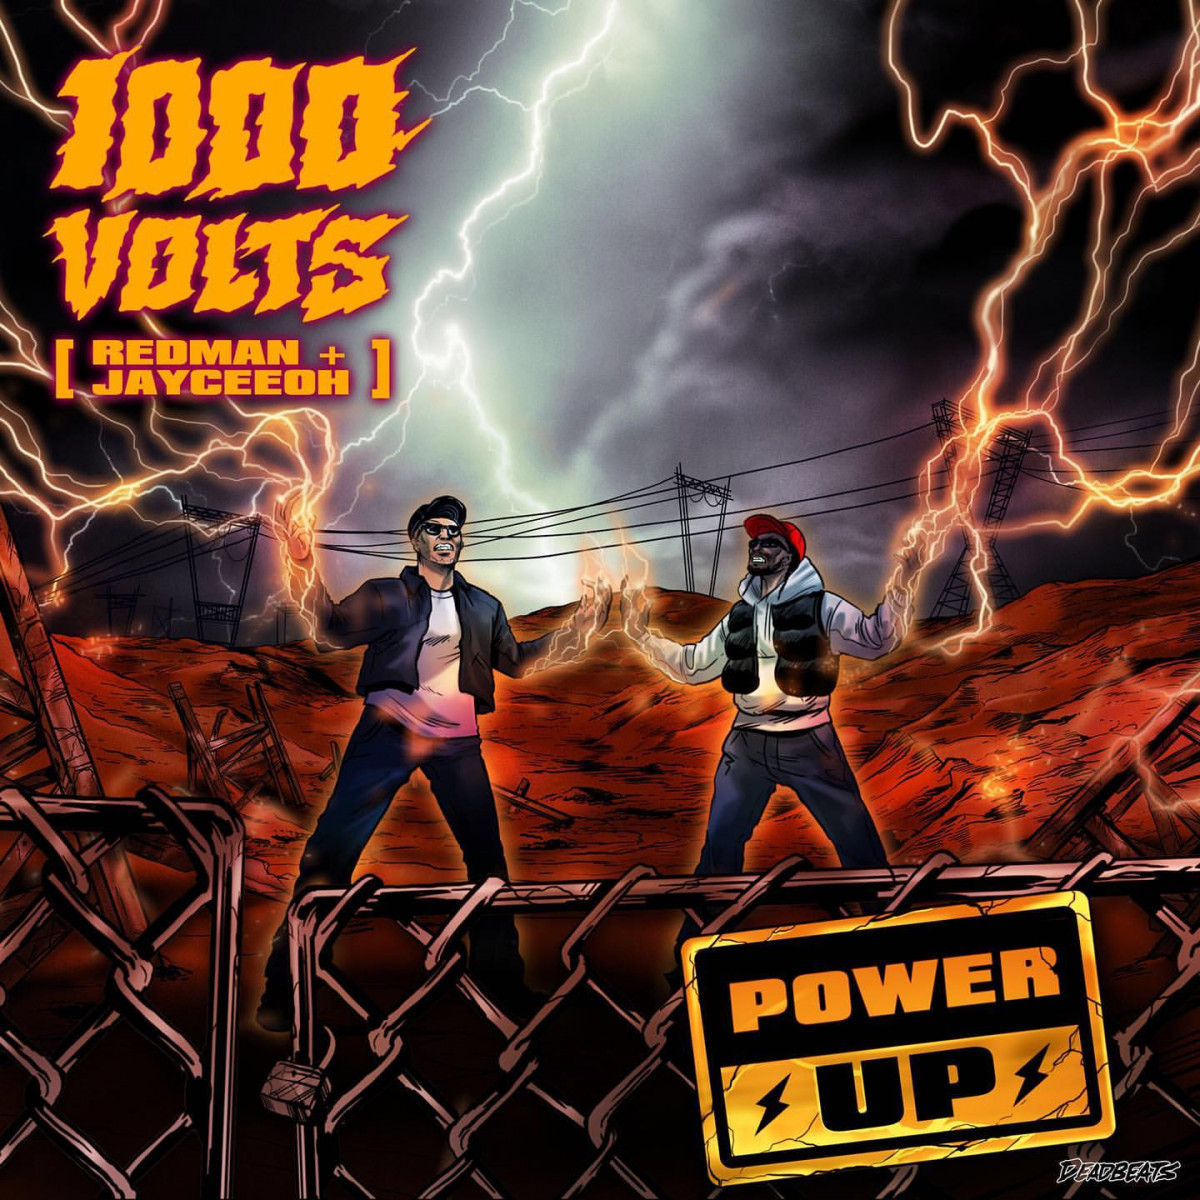 1000volts (Redman & Jayceeoh) — «Power Up»